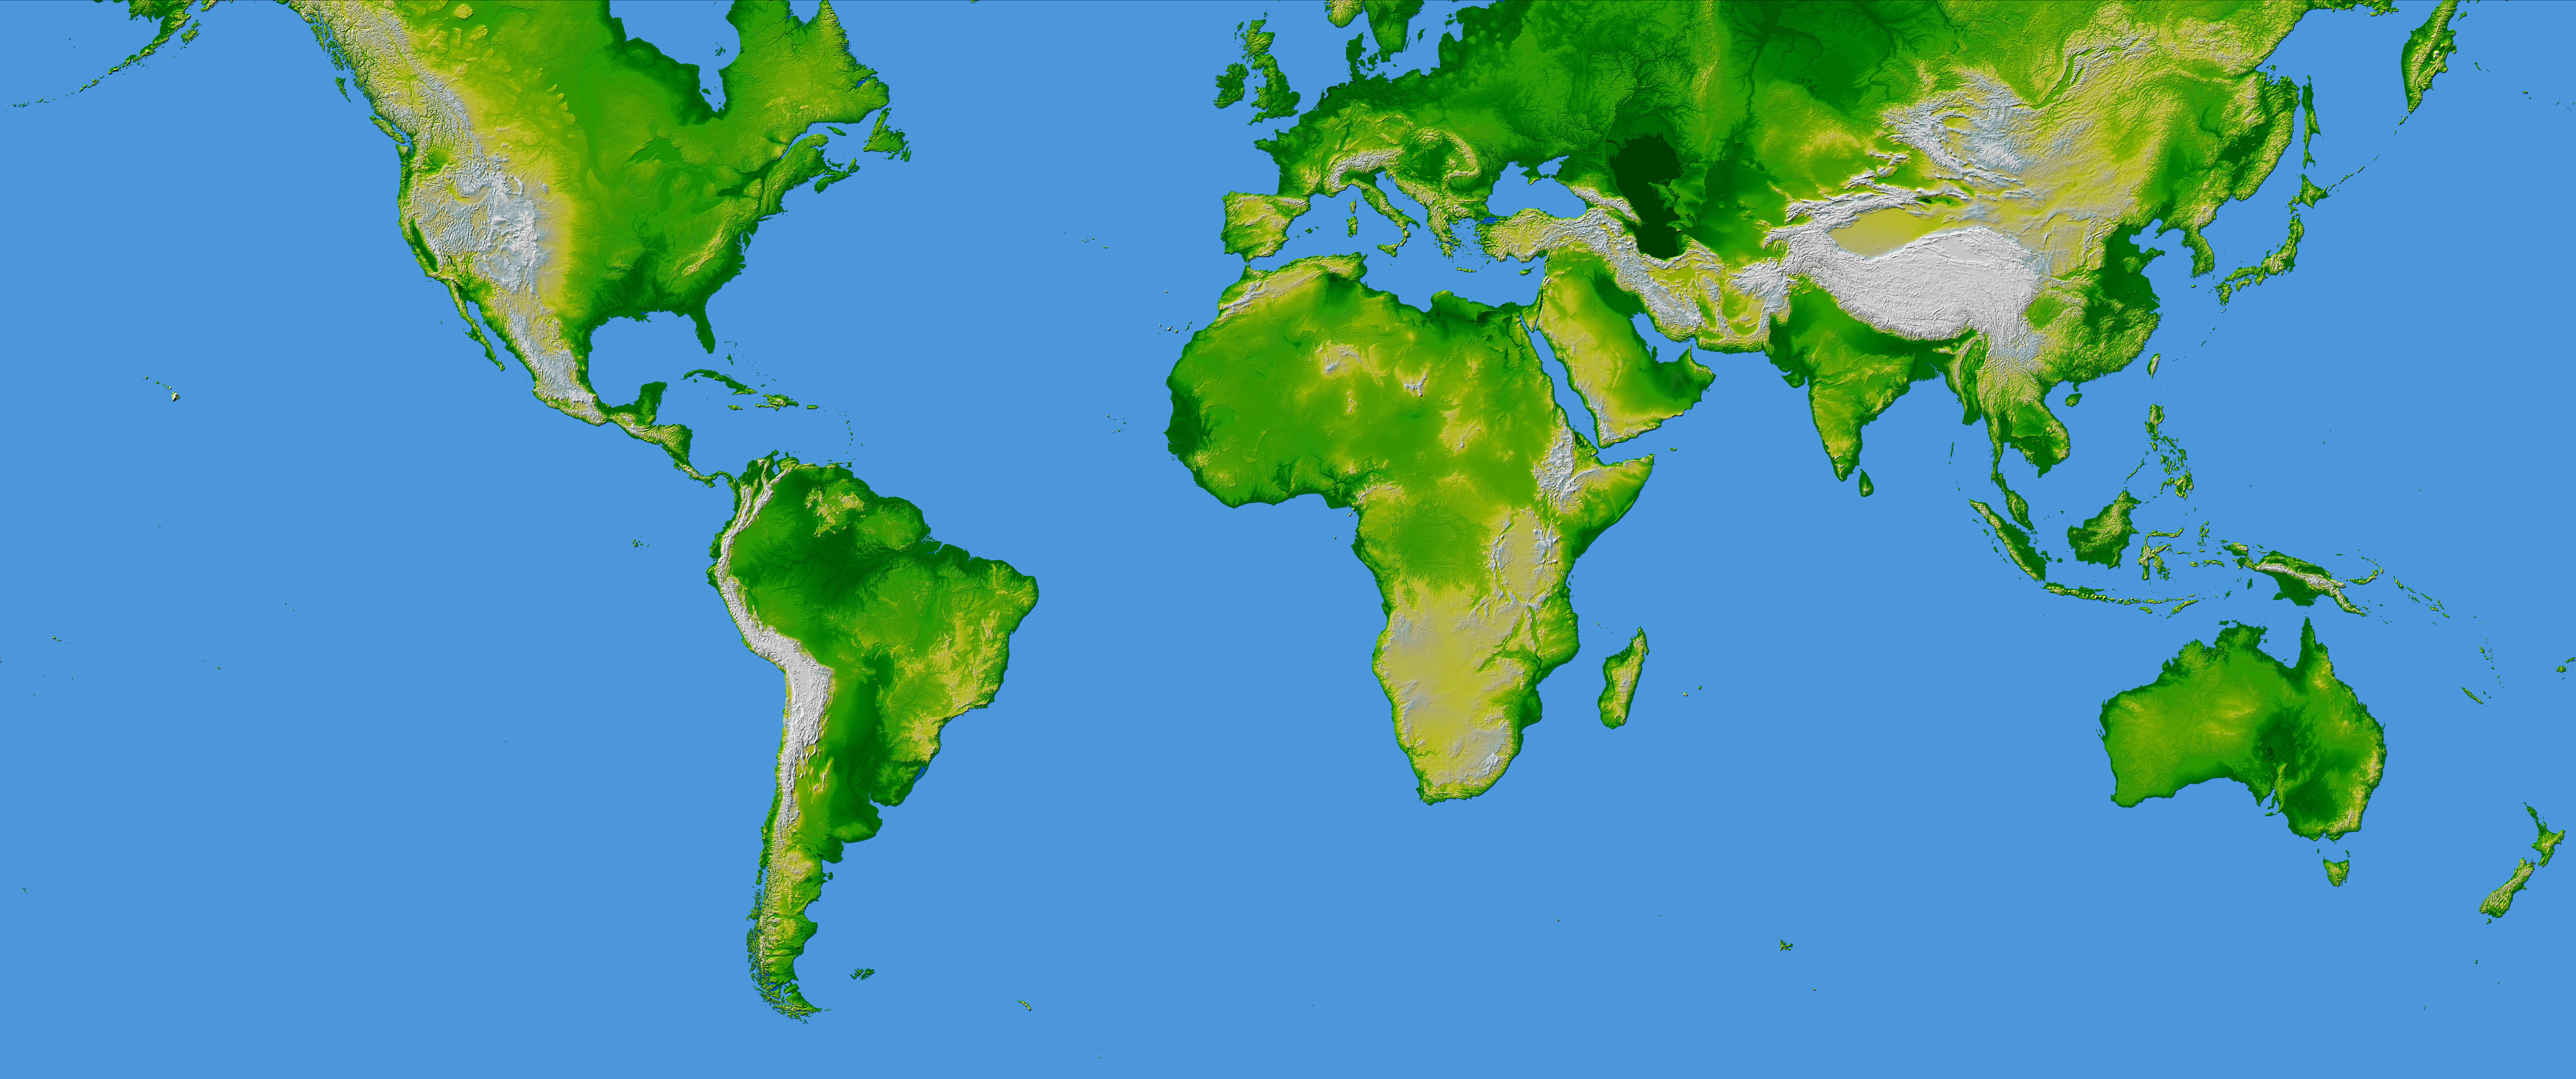 World topography